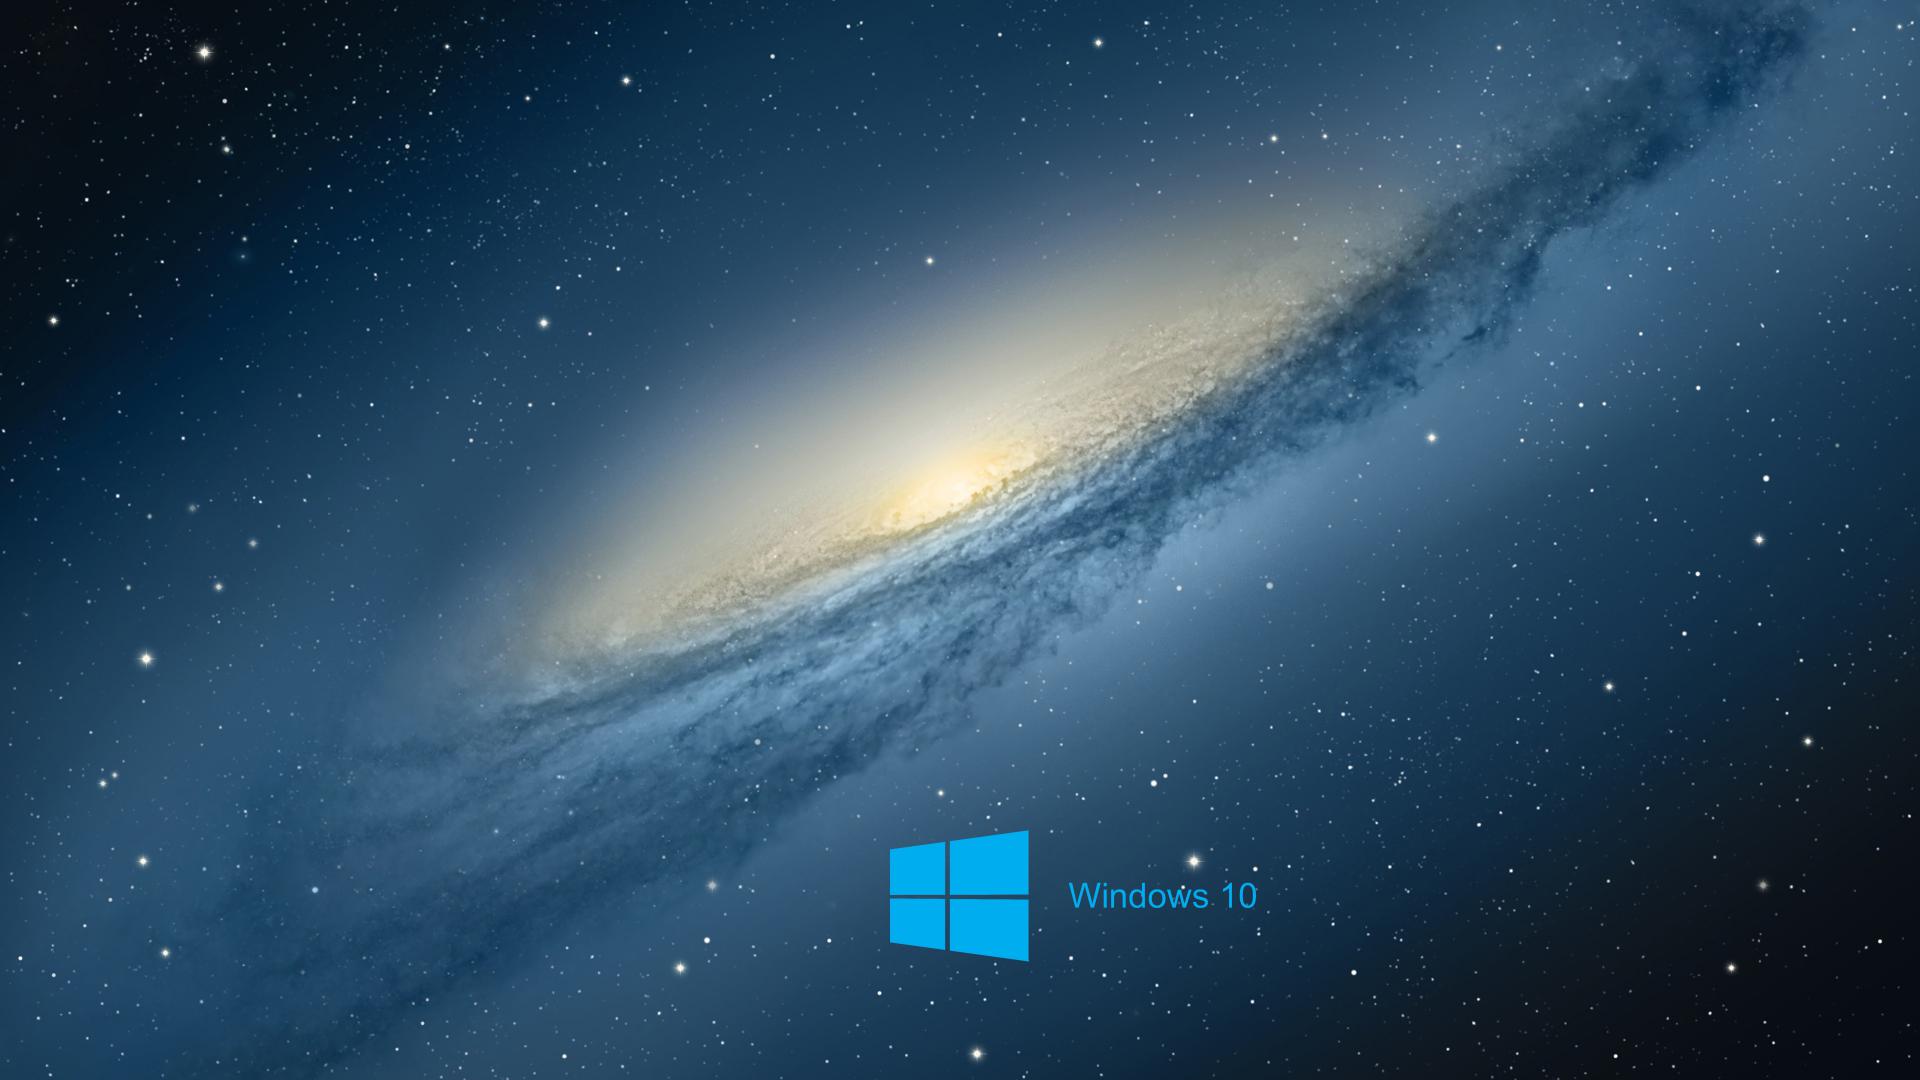 Windows 10 Desktop Wallpaper with Scientific Space Planet Galaxy Stars